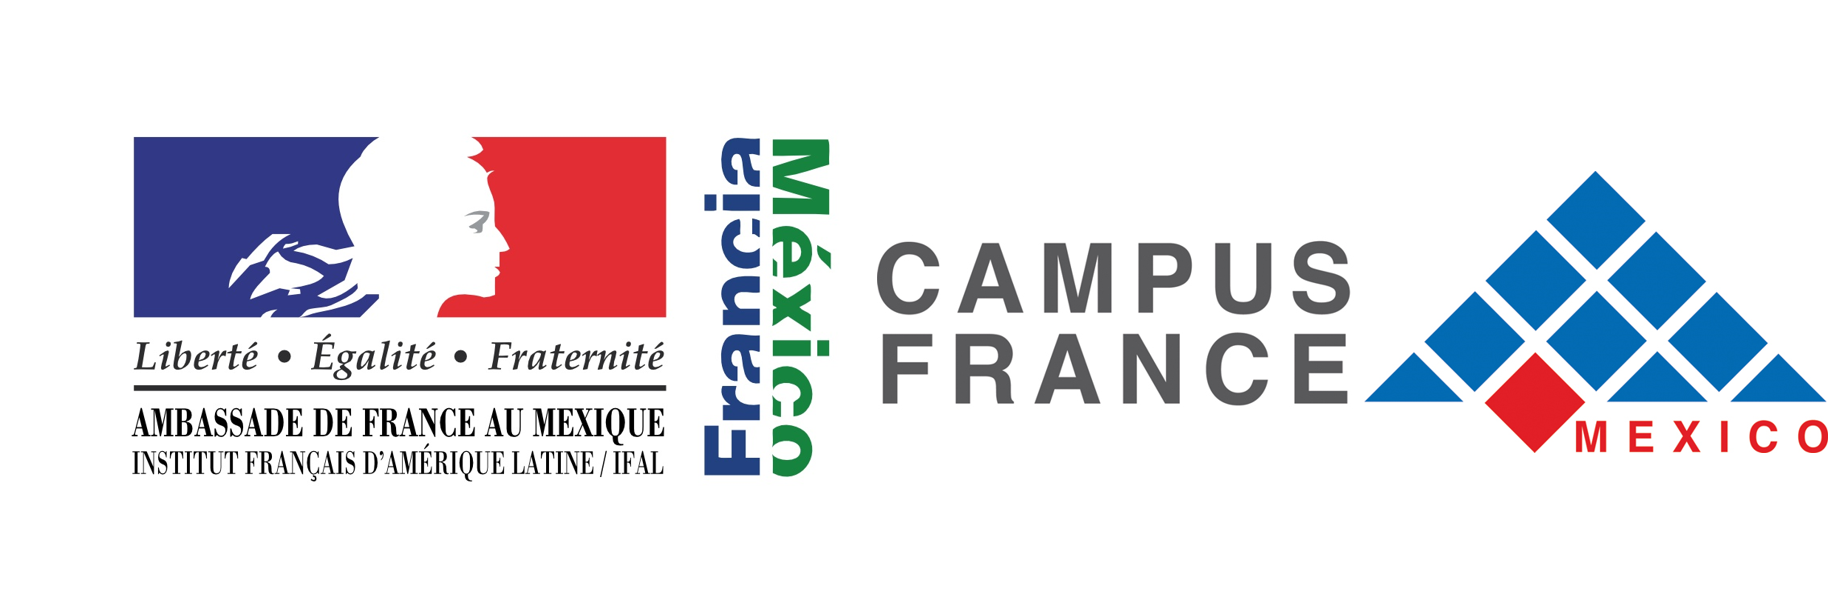 Embajada de Francia en México - Campus France